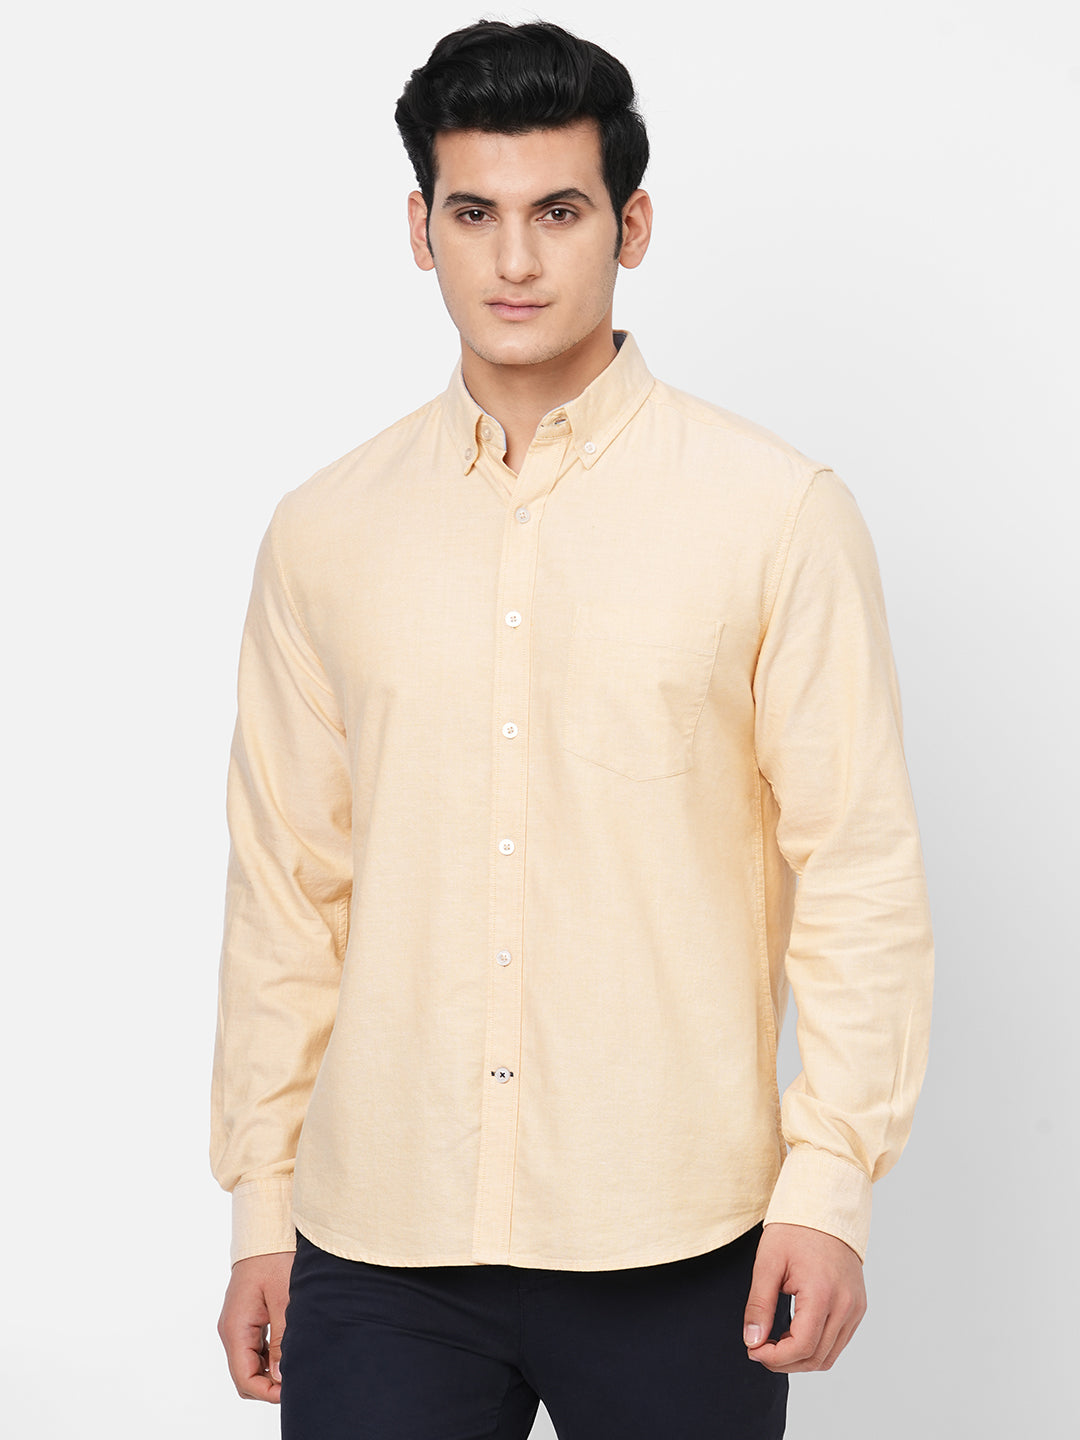 Men's Yellow Oxford Cotton Button down Collar Long Sleeved Shirt